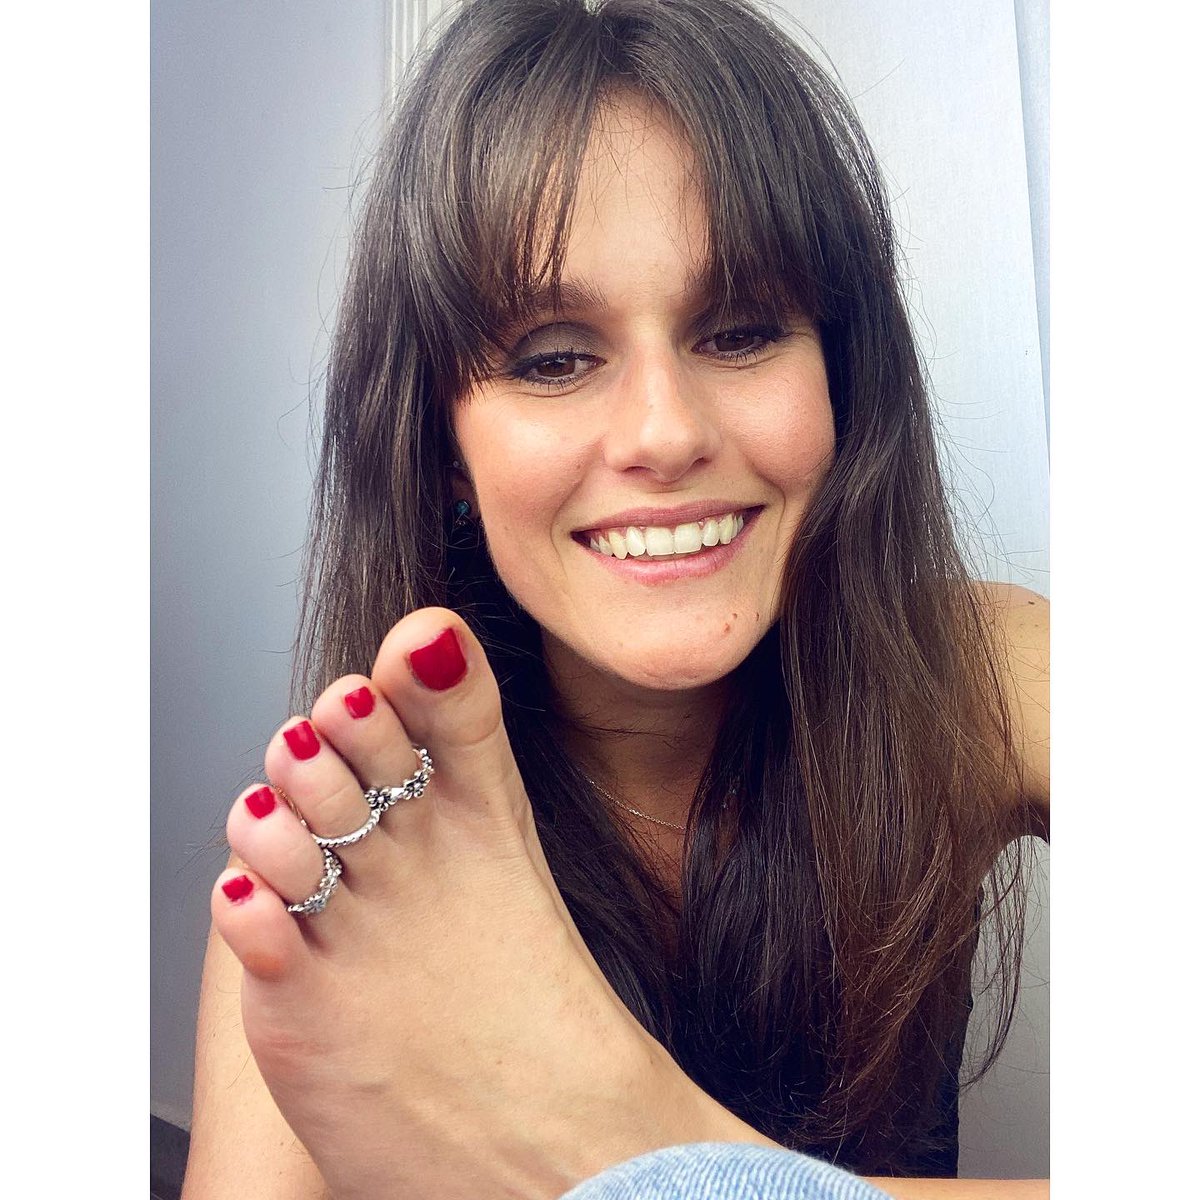 You like ? #lolafeetgirl #feet #feetpic #Feetfettish #feetbeautiful #pieds #piedsnus #feetlovers #feetinpose #french #girl #fille #piedsdefilles #toes #bijouxaddict #bijoux #bijouxdepieds #jewelry